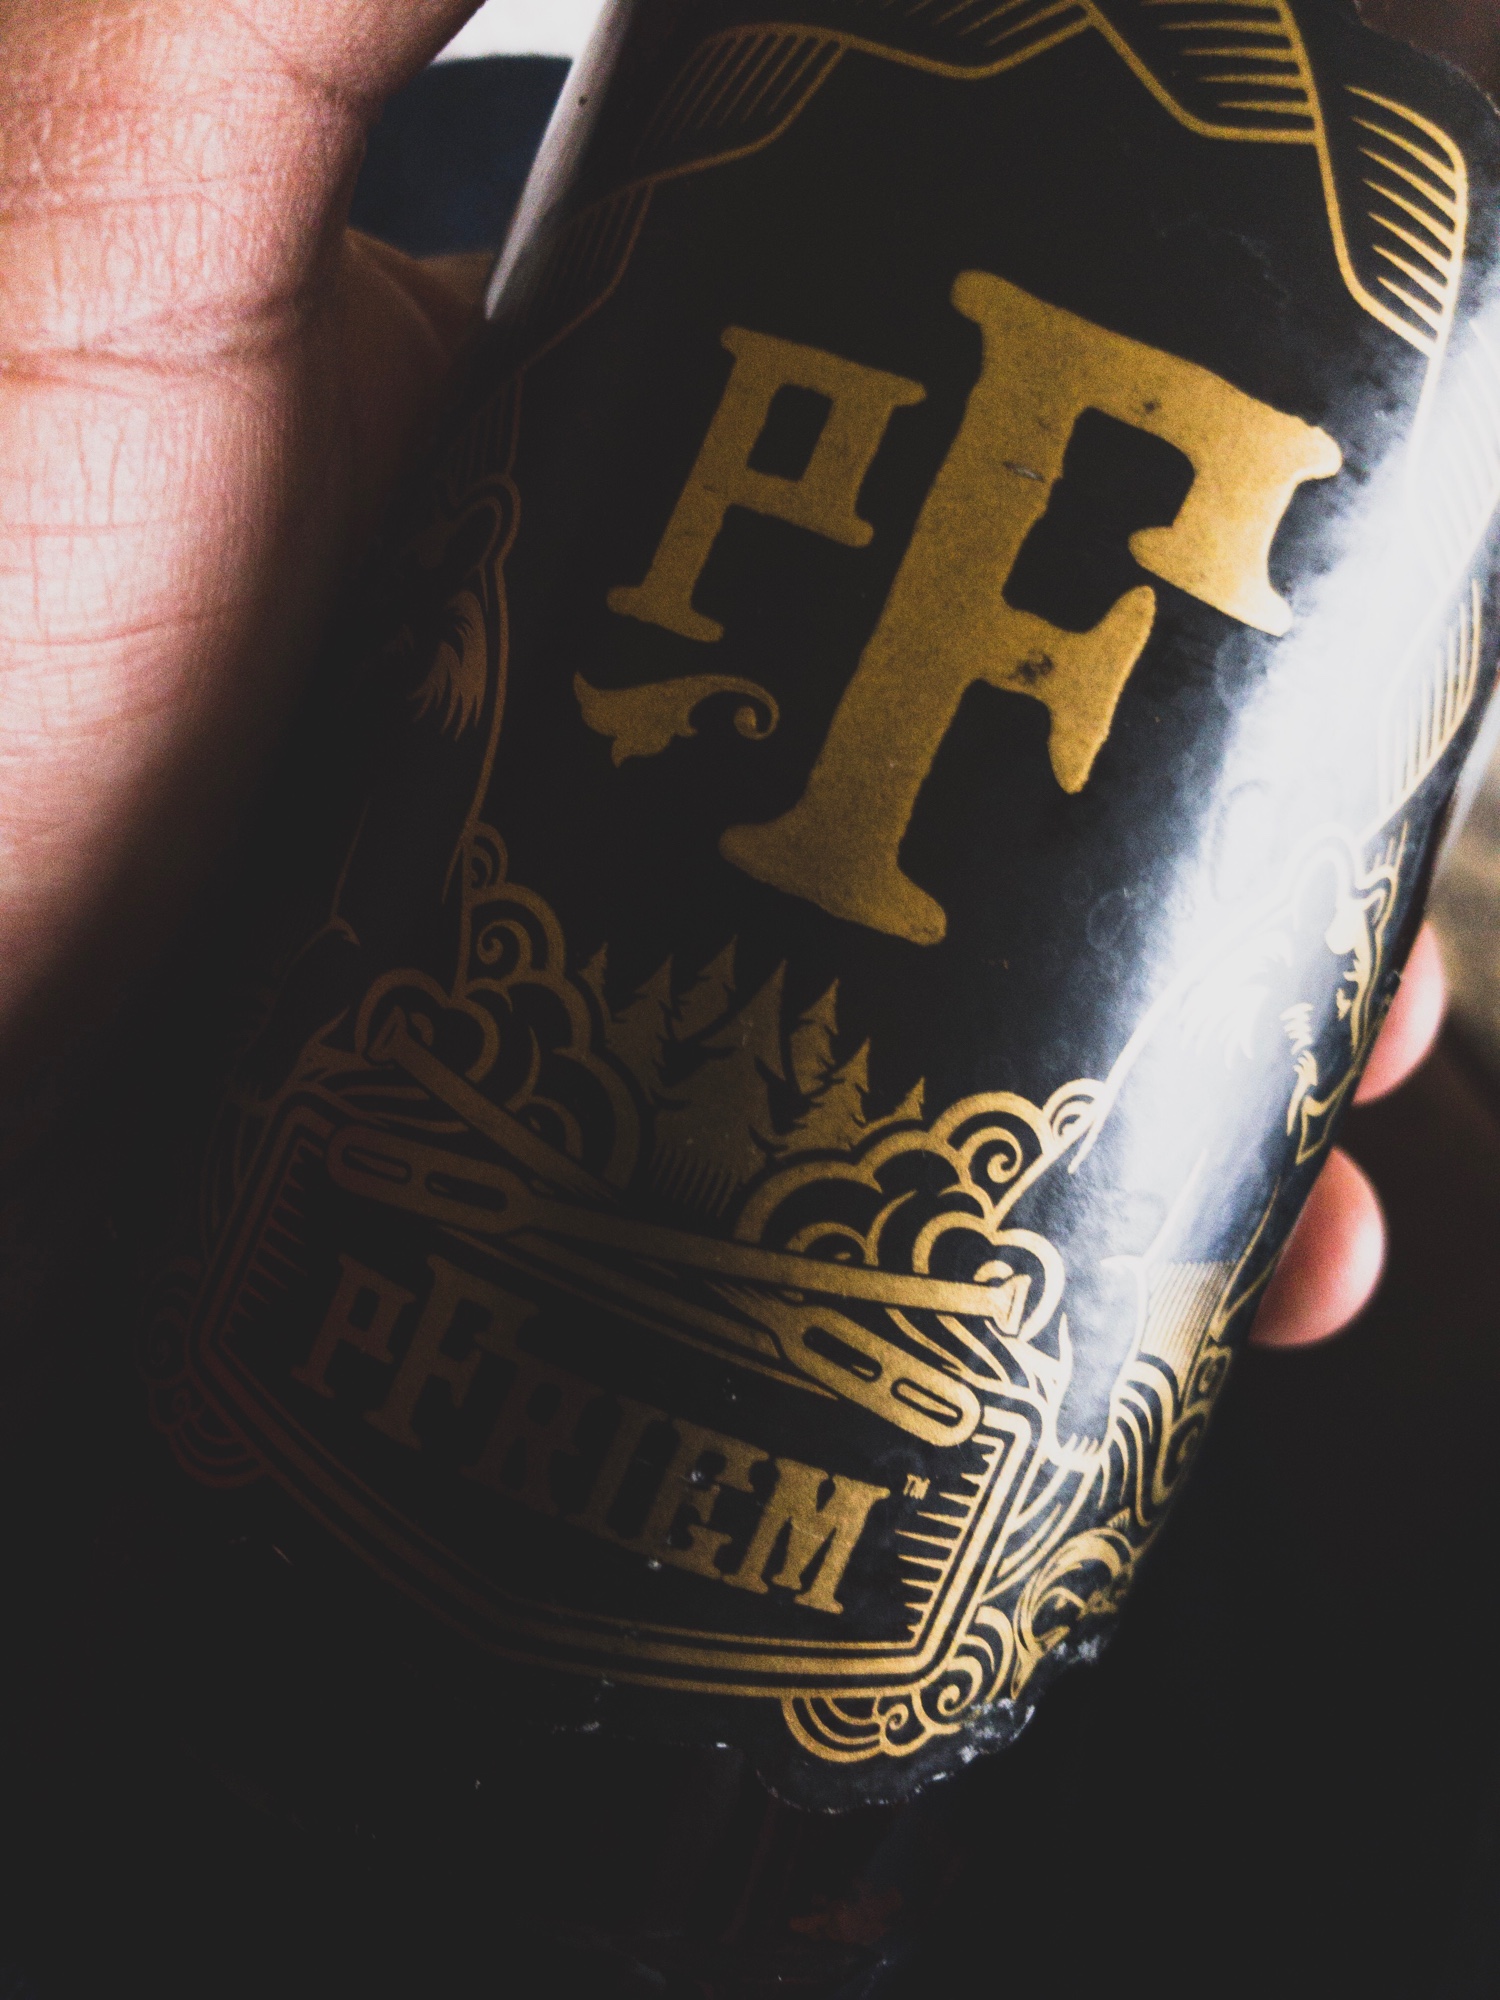 pFriem Family Brewers's Dank IPA